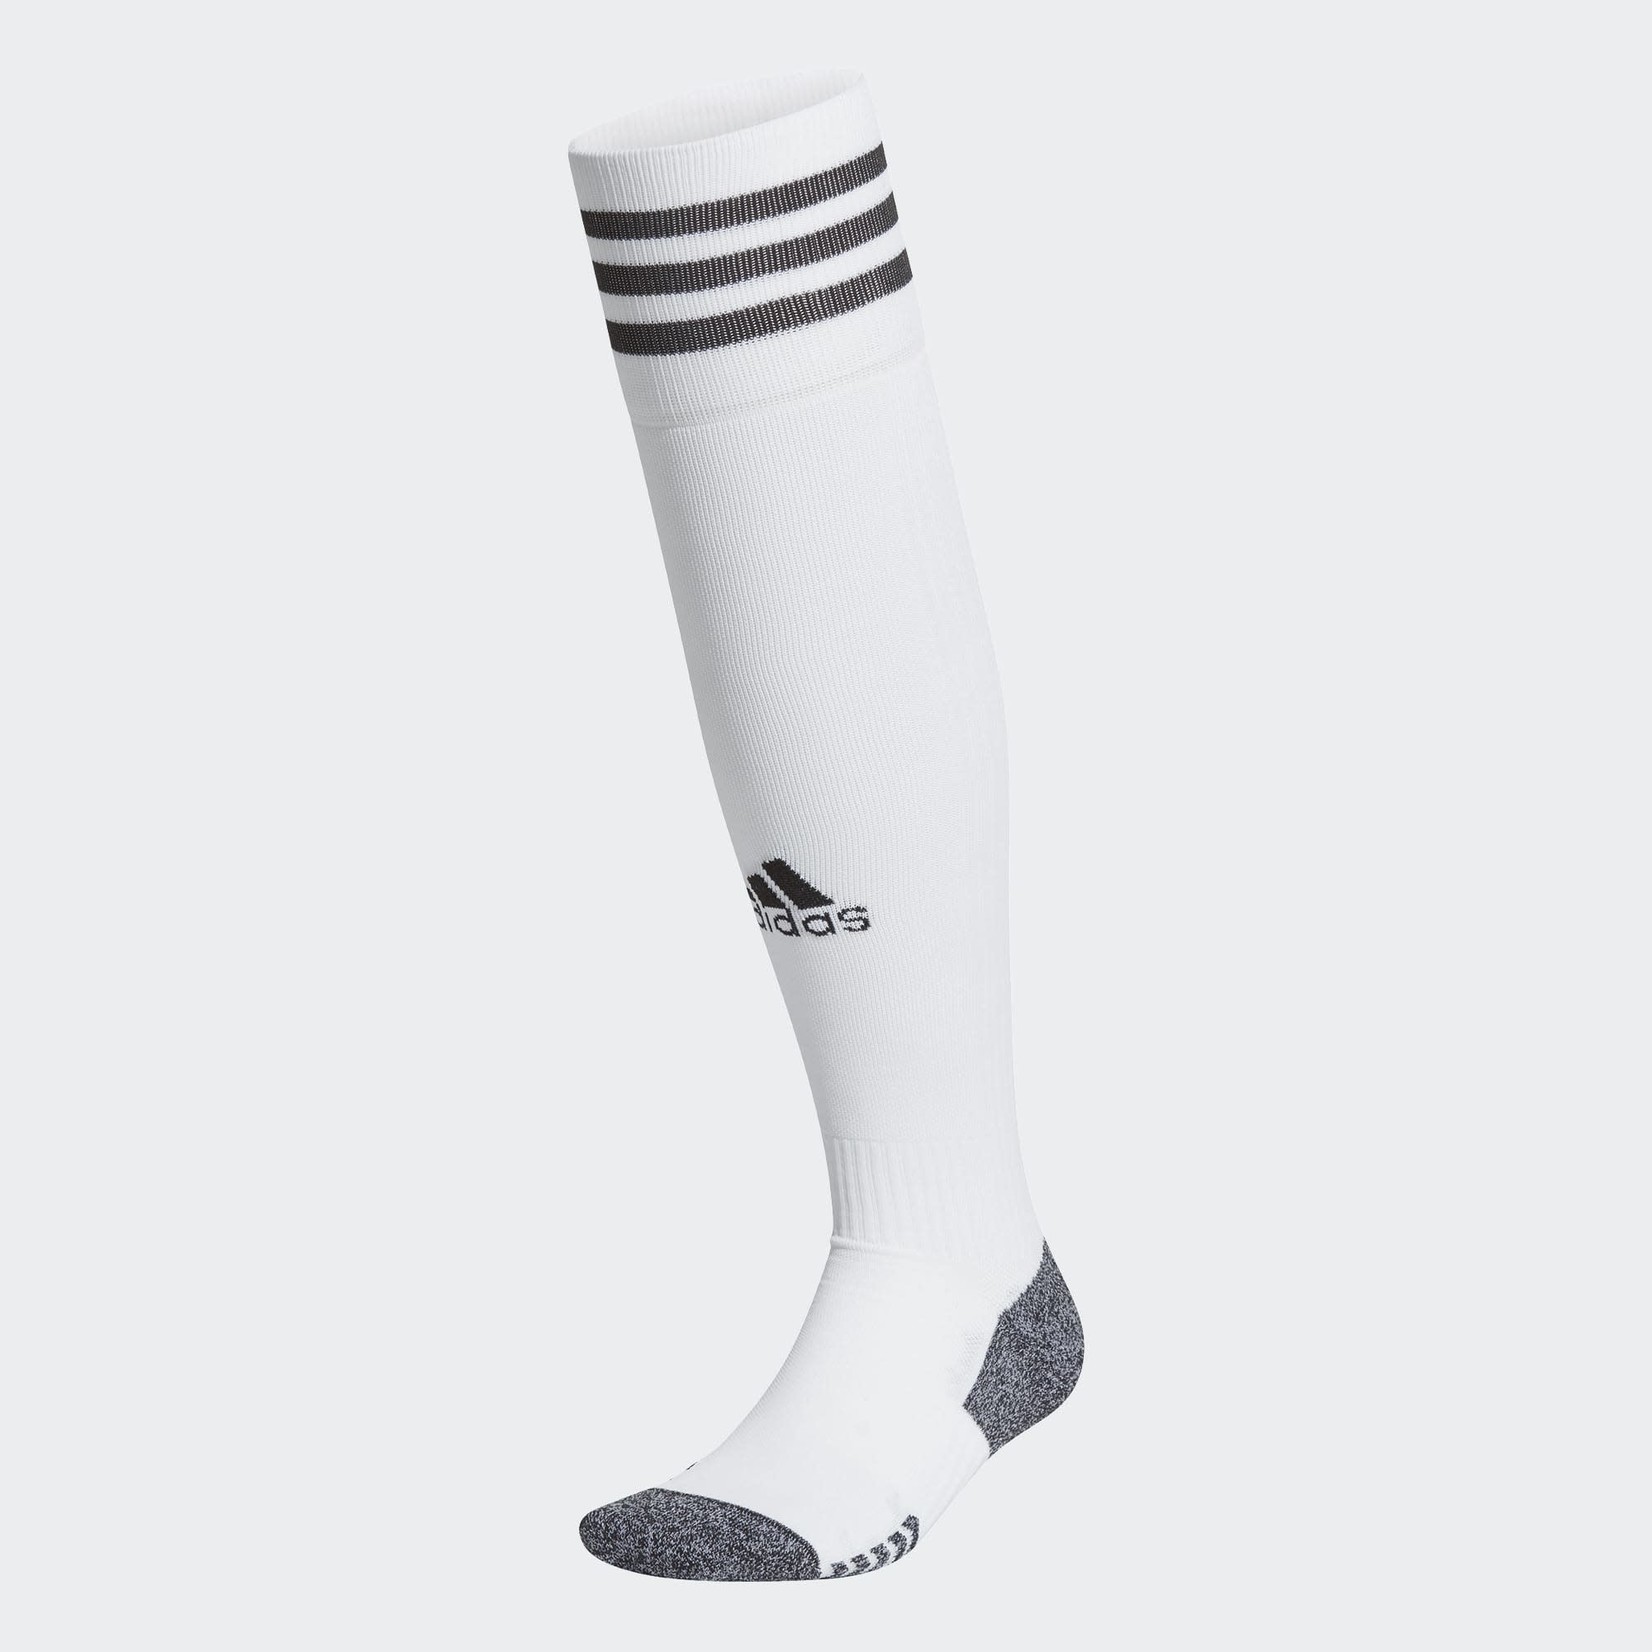 Adidas Adidas Soccer Socks, Adi 21